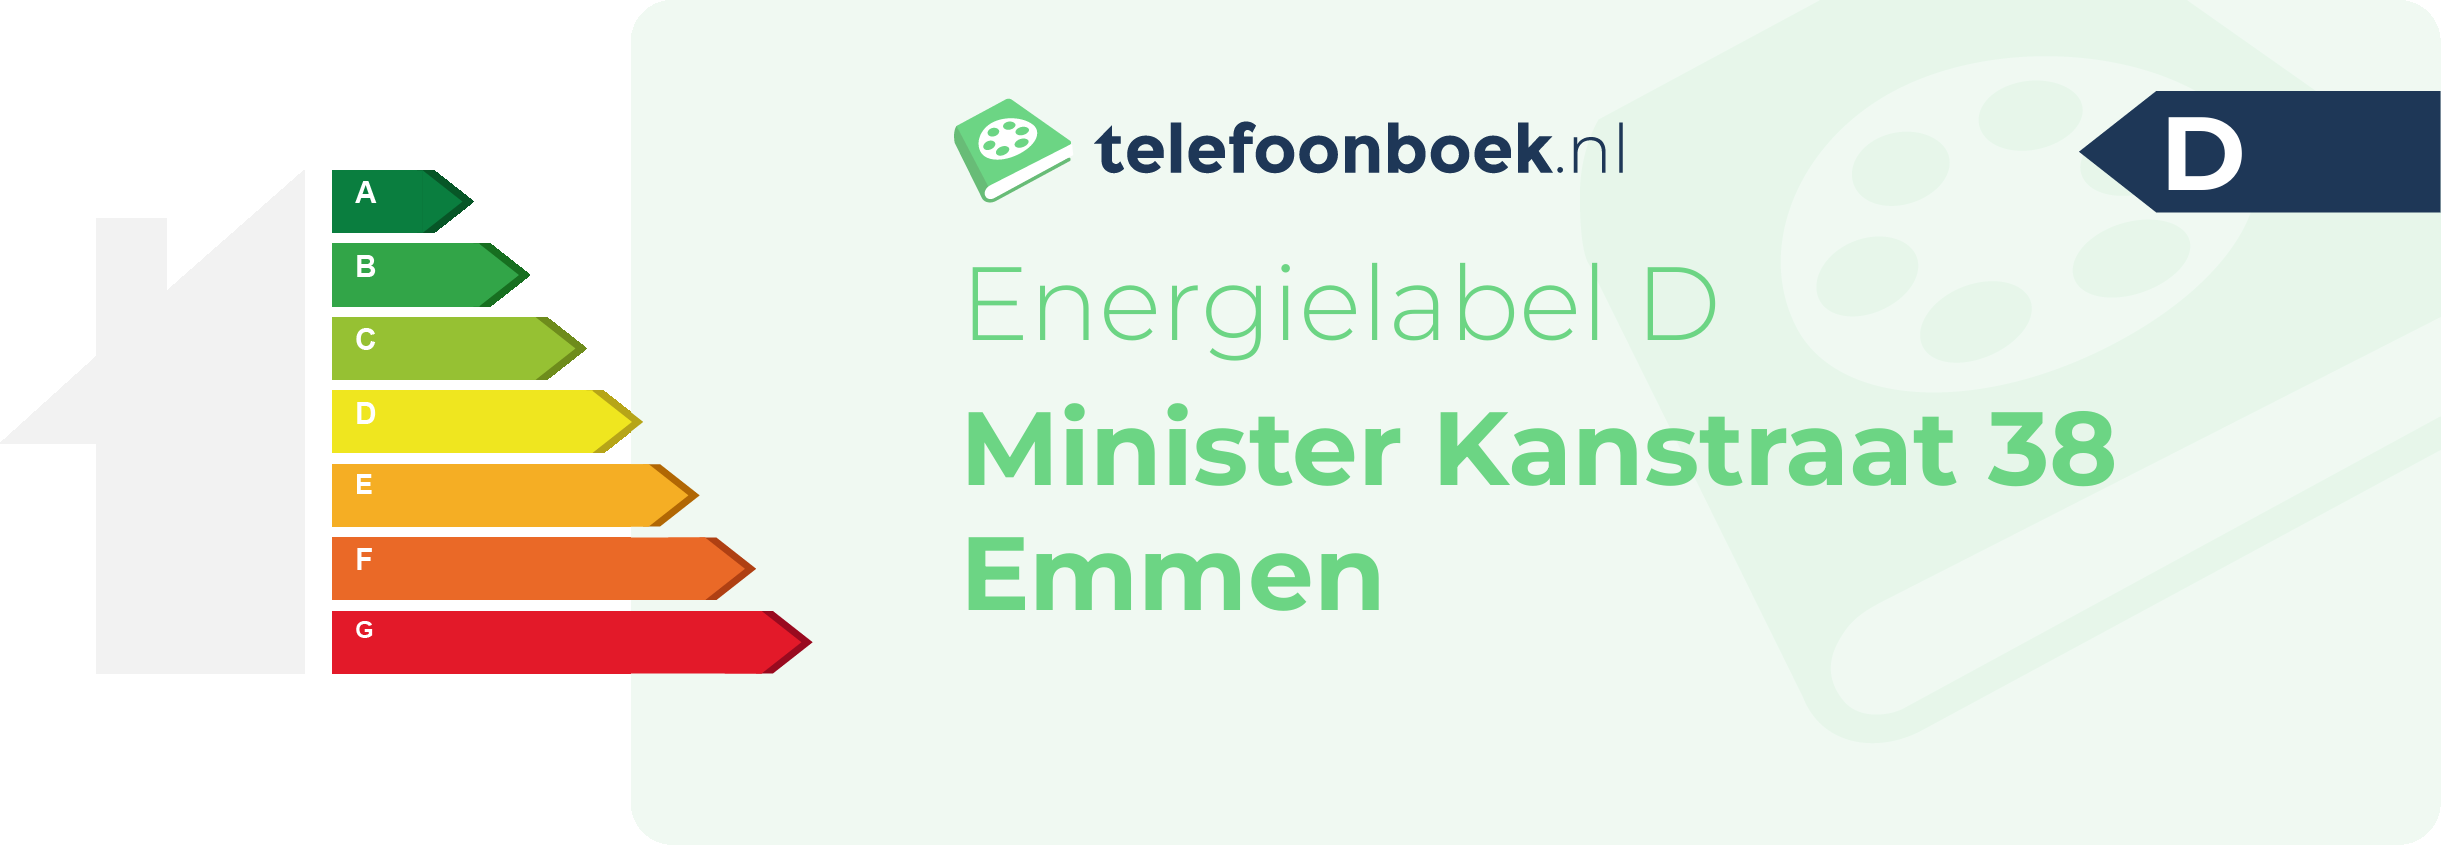 Energielabel Minister Kanstraat 38 Emmen